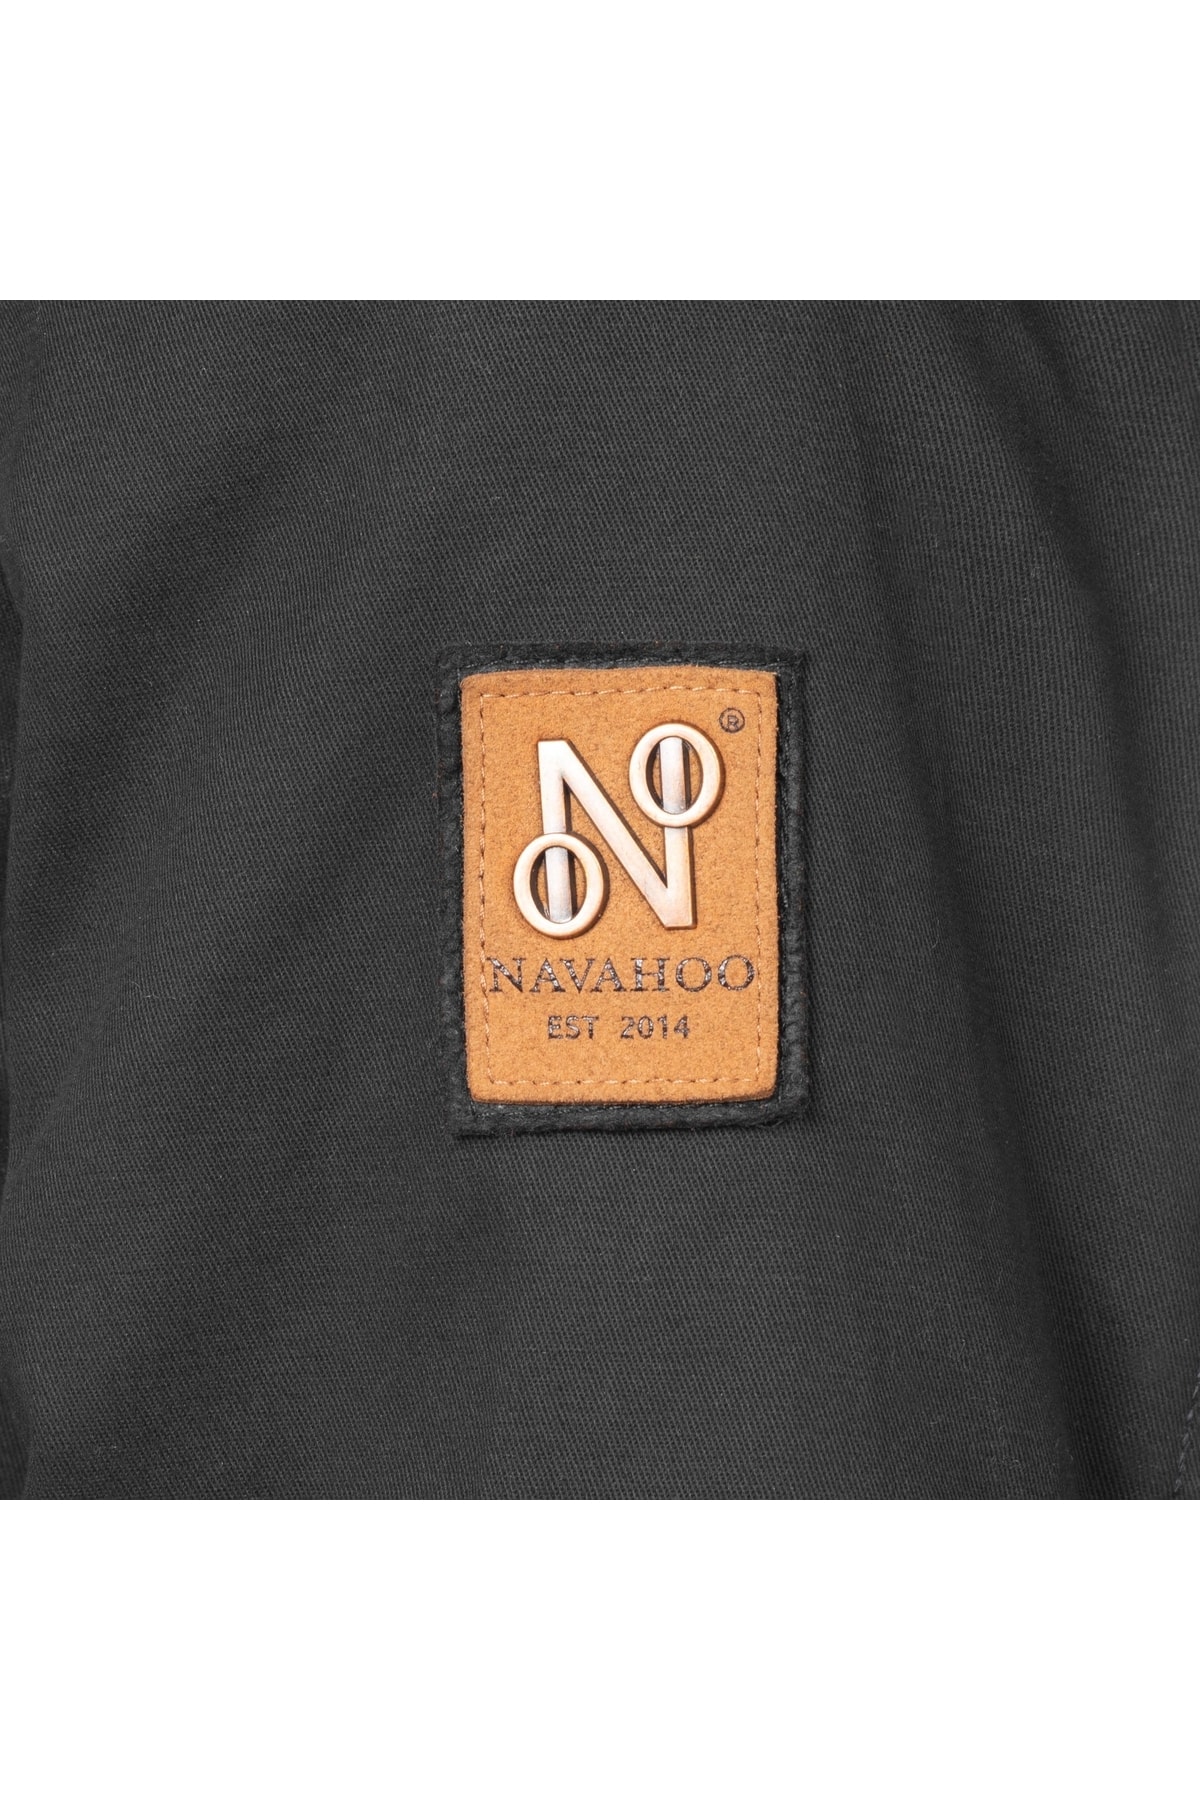 Navahoo Mantel Schwarz Basic Fast ausverkauft